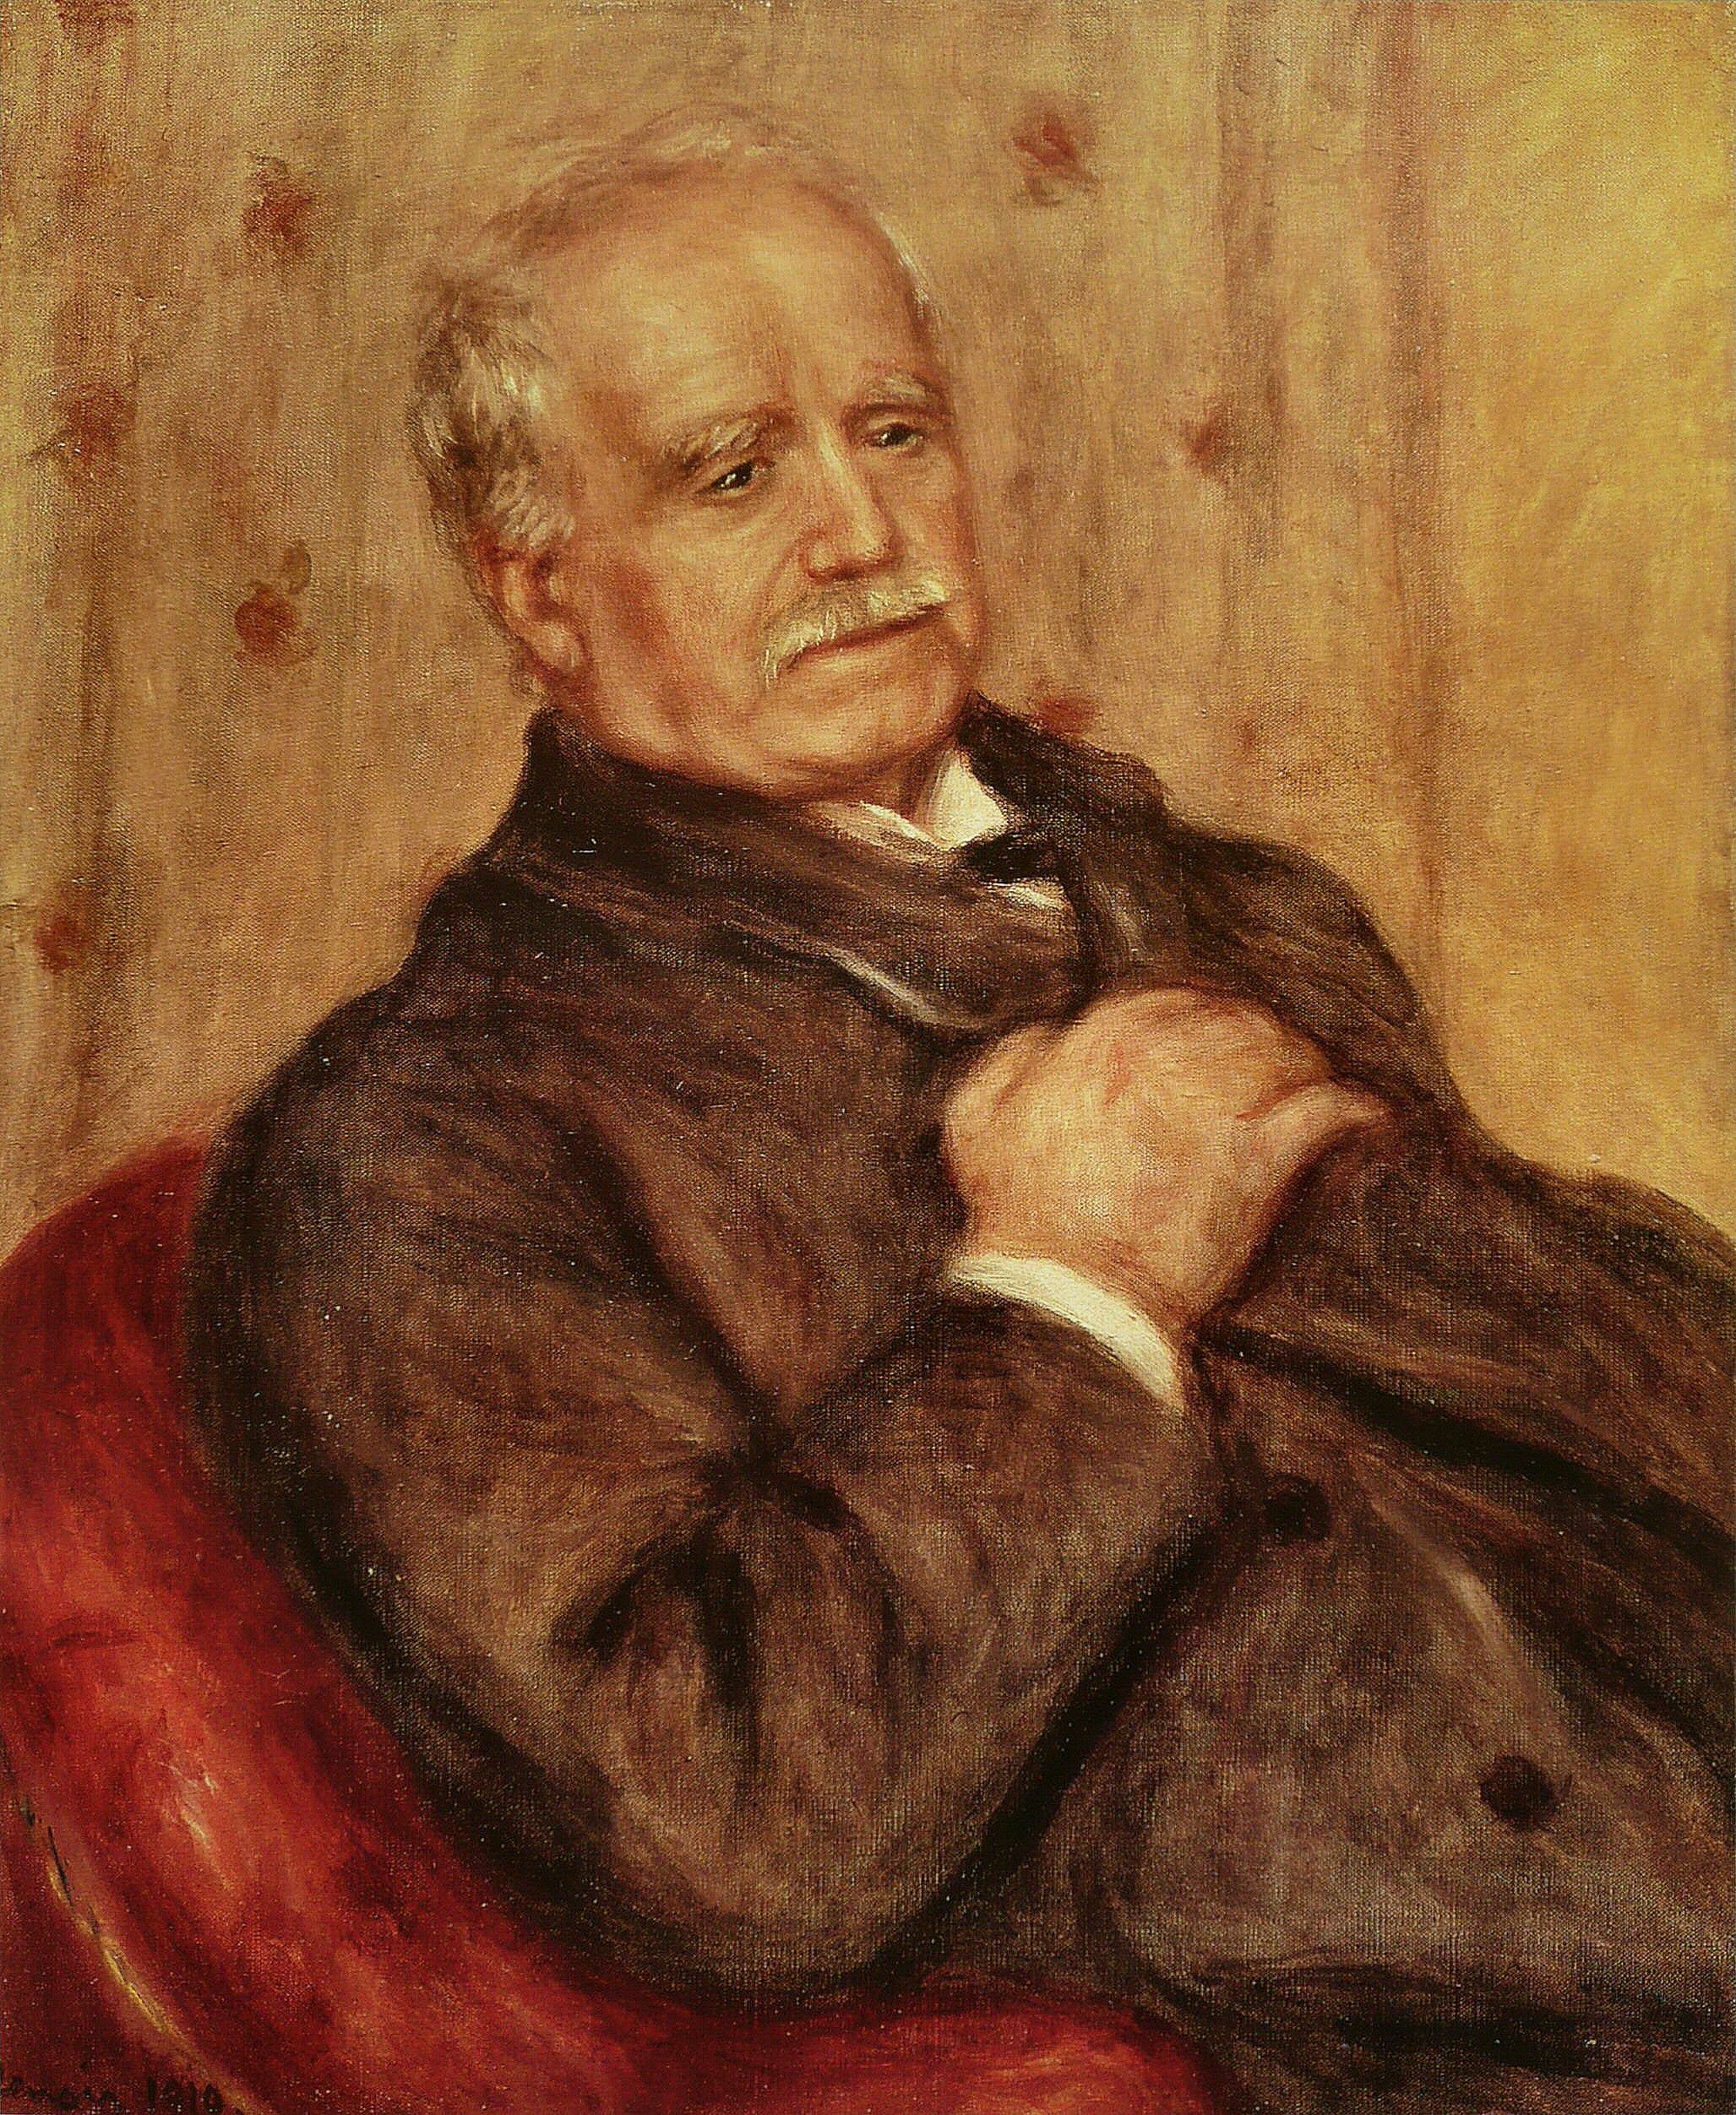 Pierre Auguste Renoir, Portrait of Paul Durand-Ruel, 1910